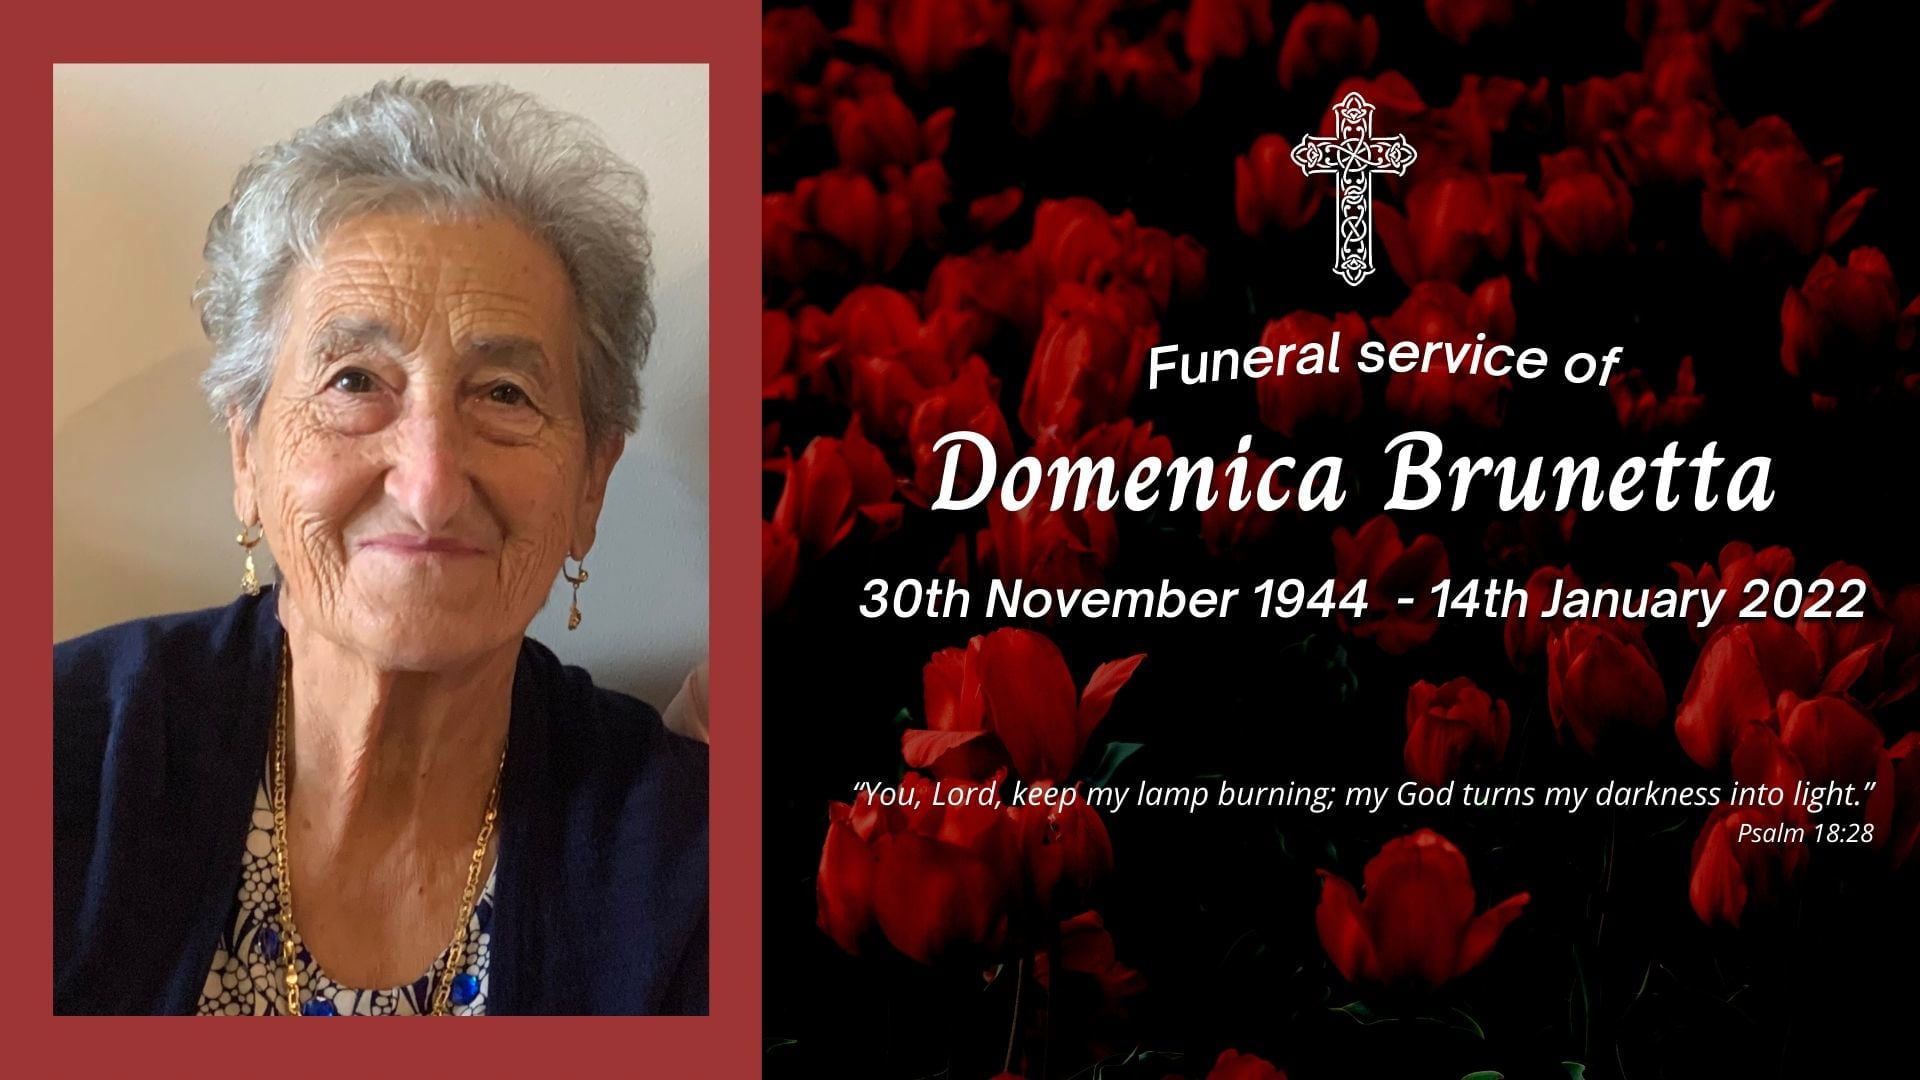 Funeral service of the late Domenica Brunetta